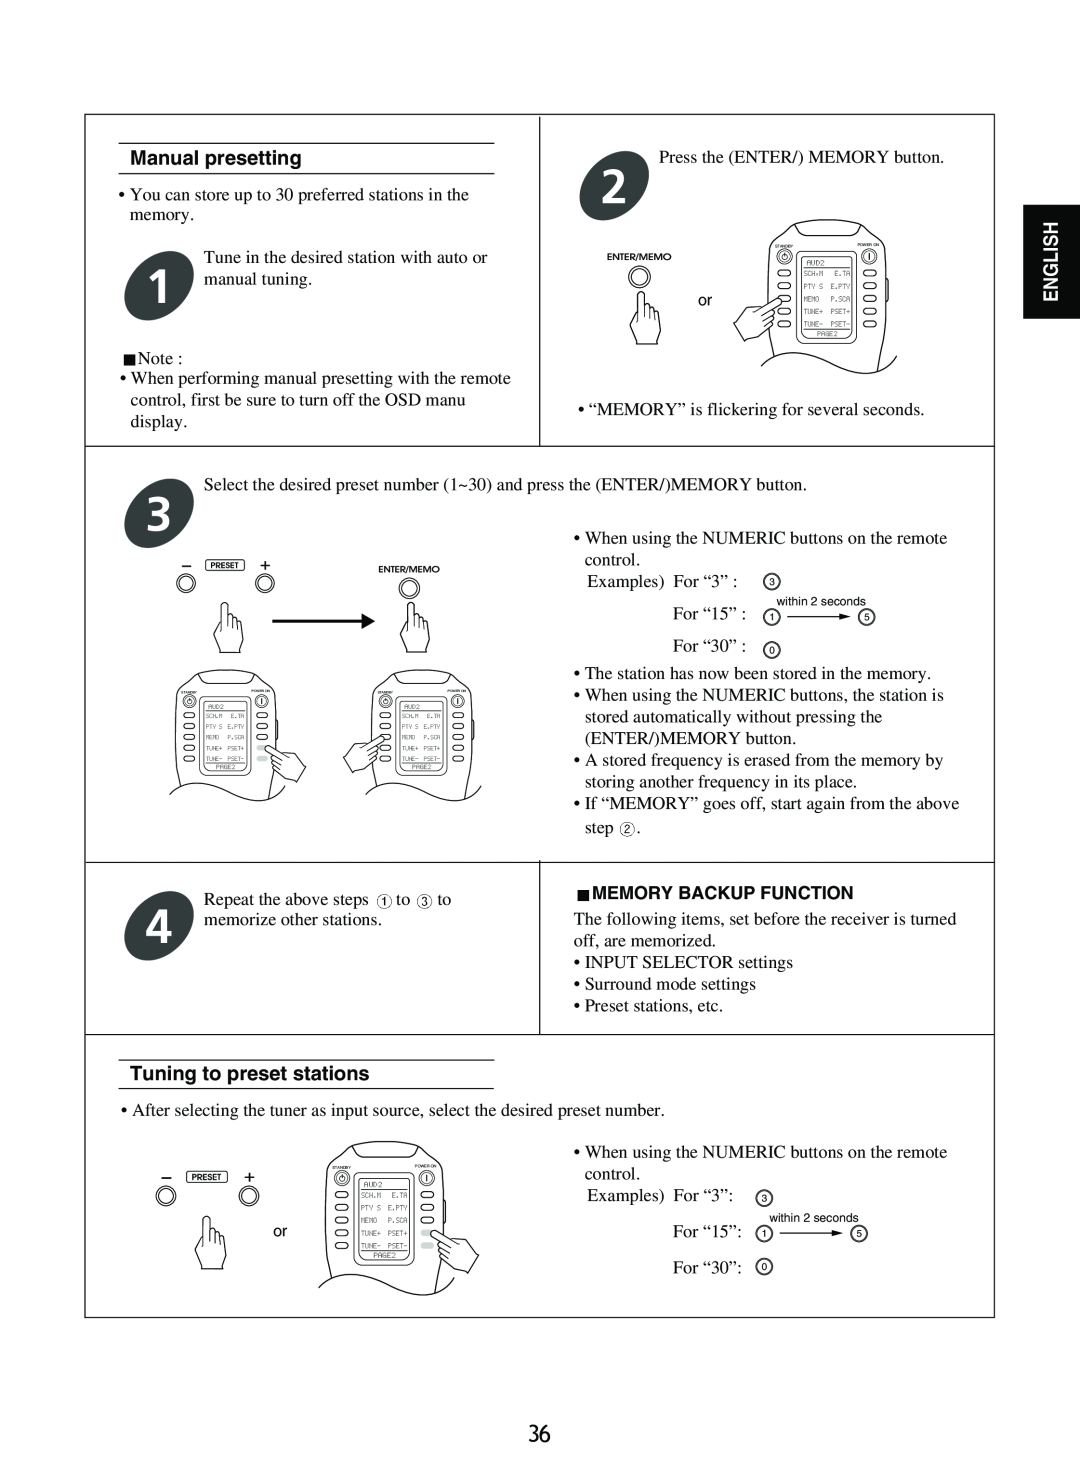 Sherwood R-965 manual Manual presetting, Tuning to preset stations, Memory Backup Function, English 